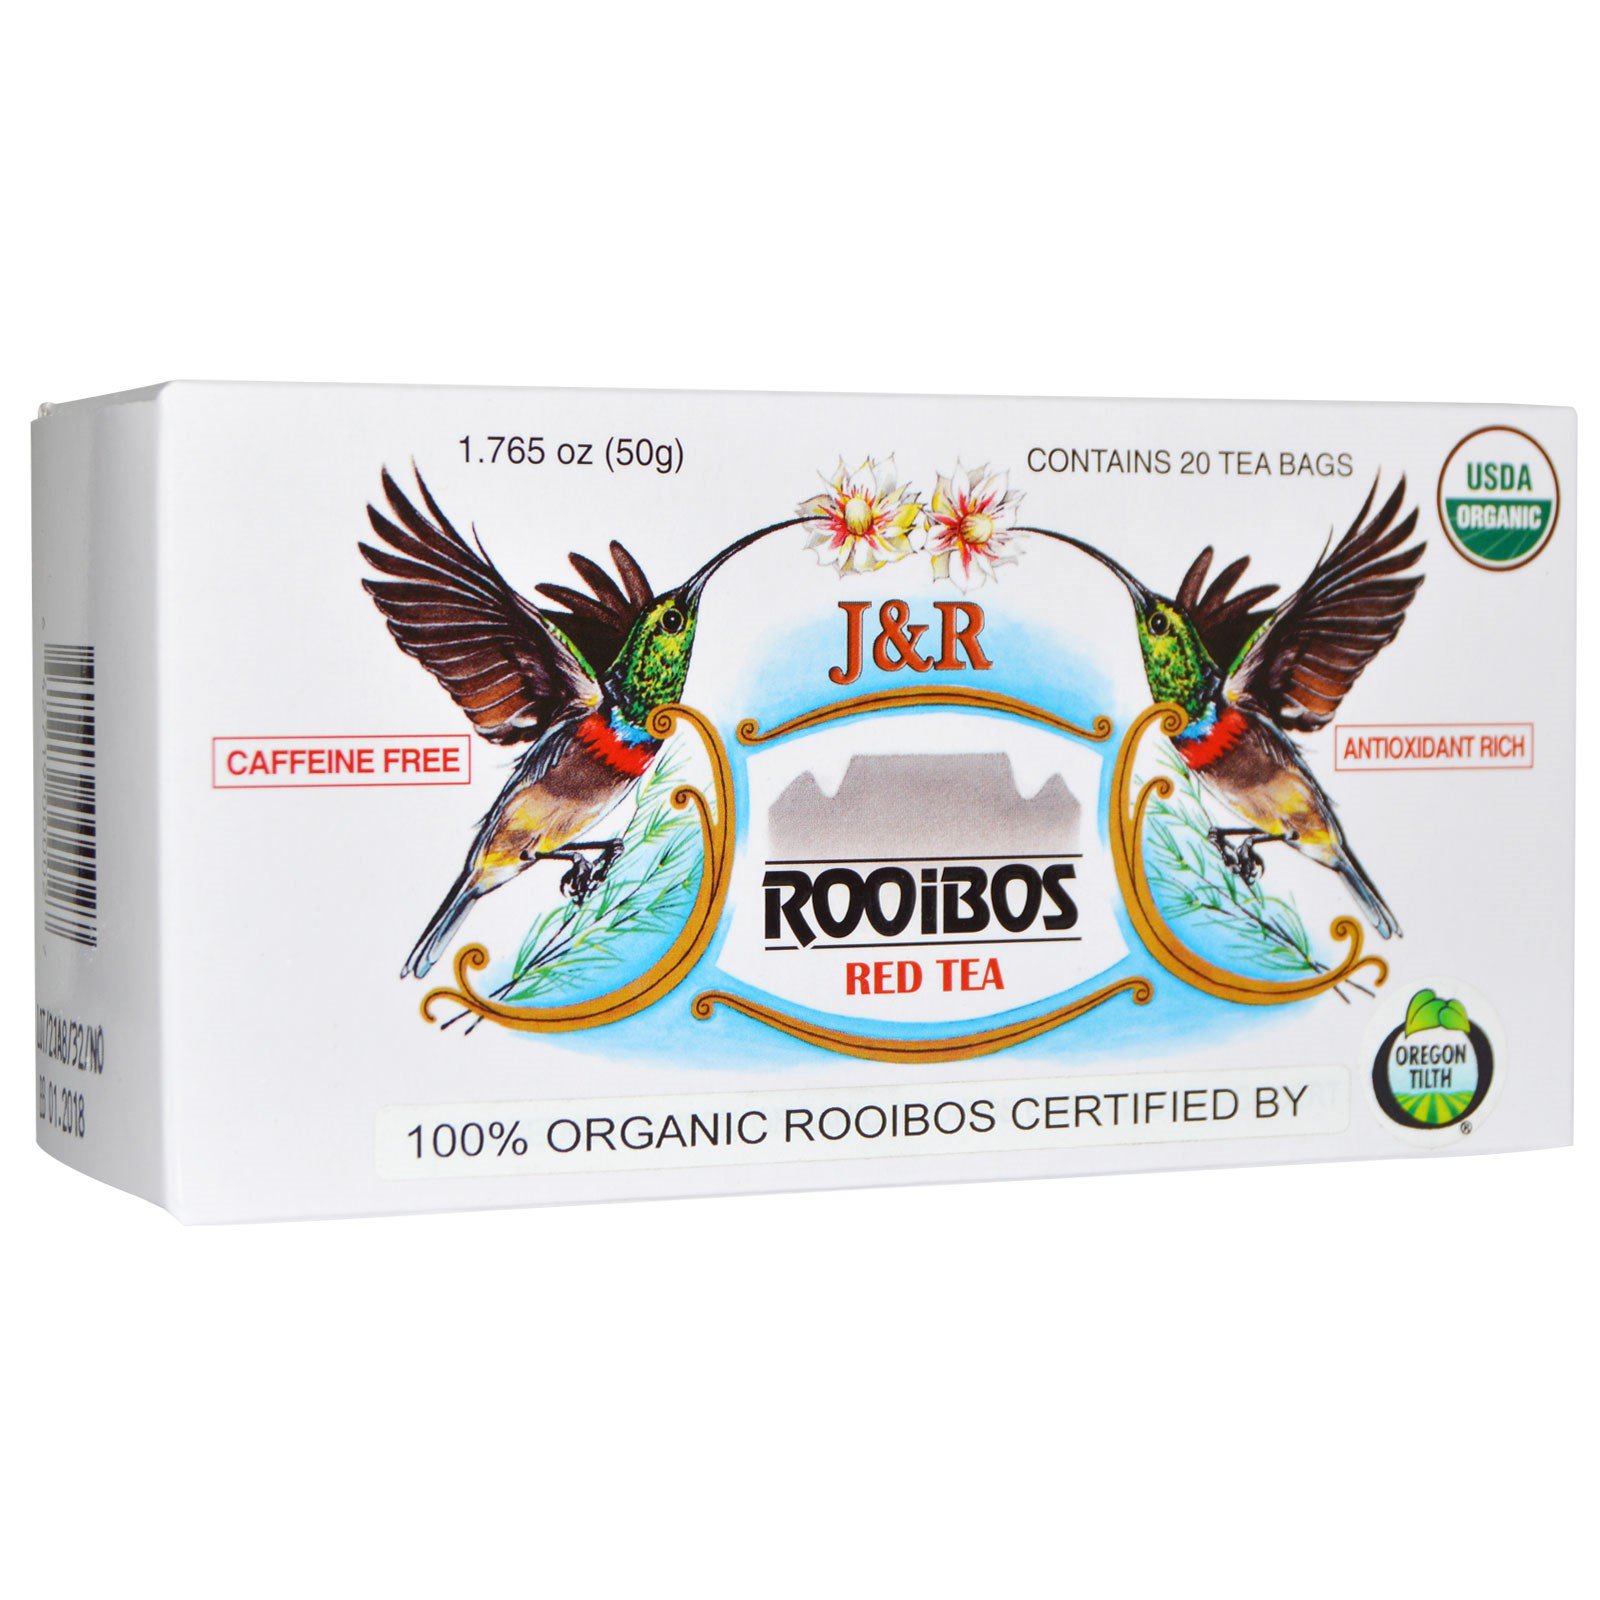 J&R Port Trading Co. Port Trading co. J&R Rooibos Red Tea caffeine Free 20 Tea Bags 1.765 oz (50 g) (SIX PAcK)